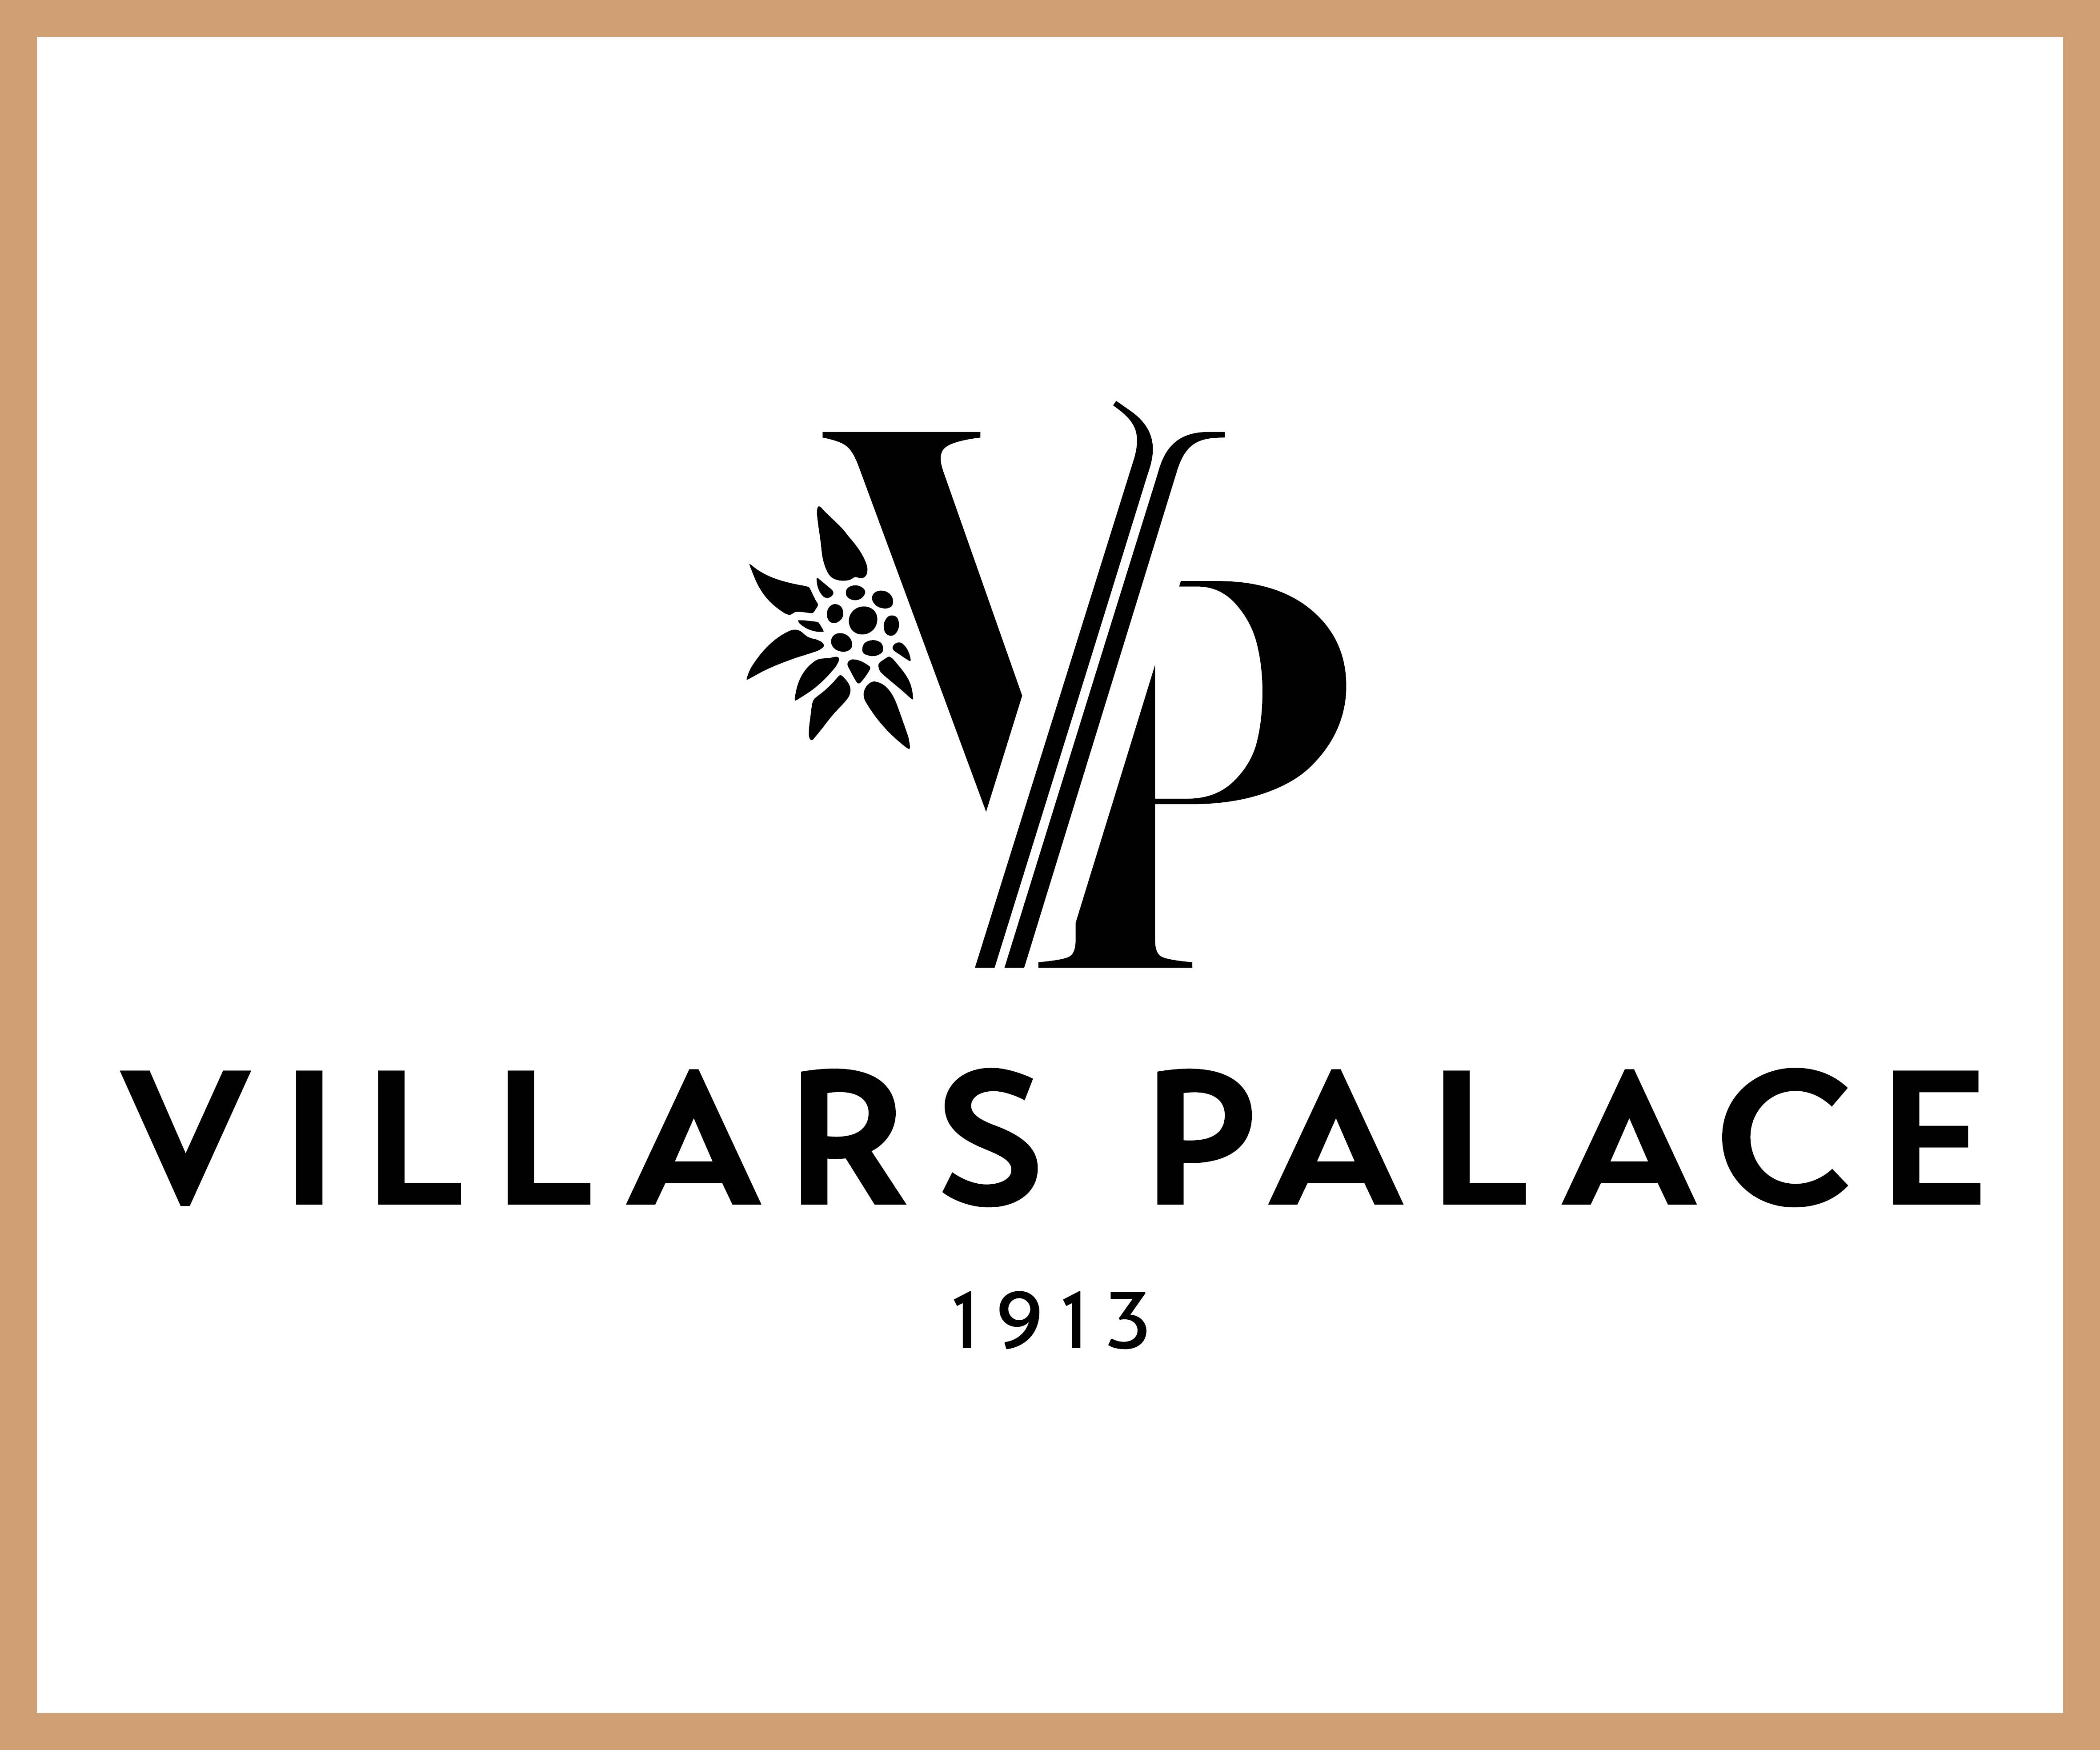 Villars Palace